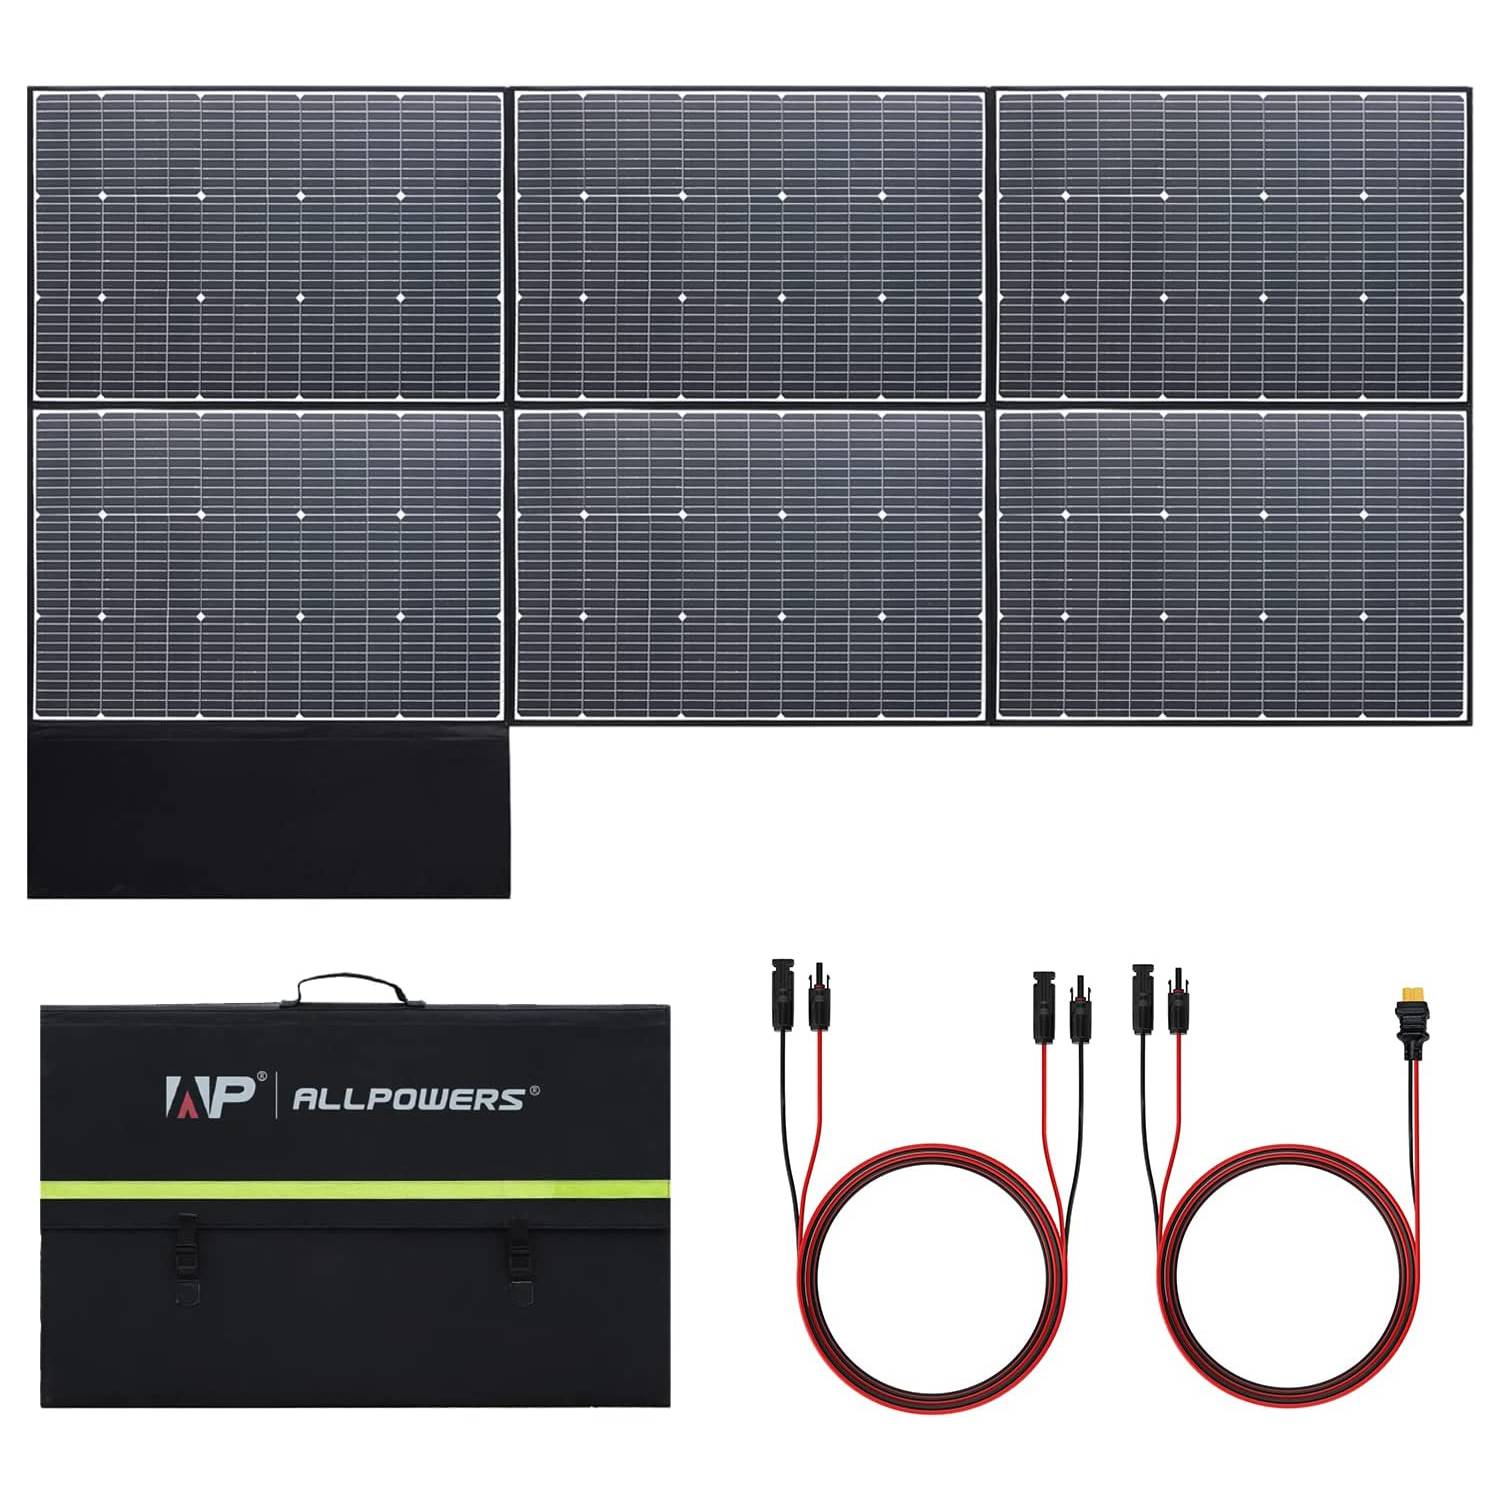 ALLPOWERS Solar Generator Kit 2400W (S2000 Pro + SP039 600W Solar Panel)